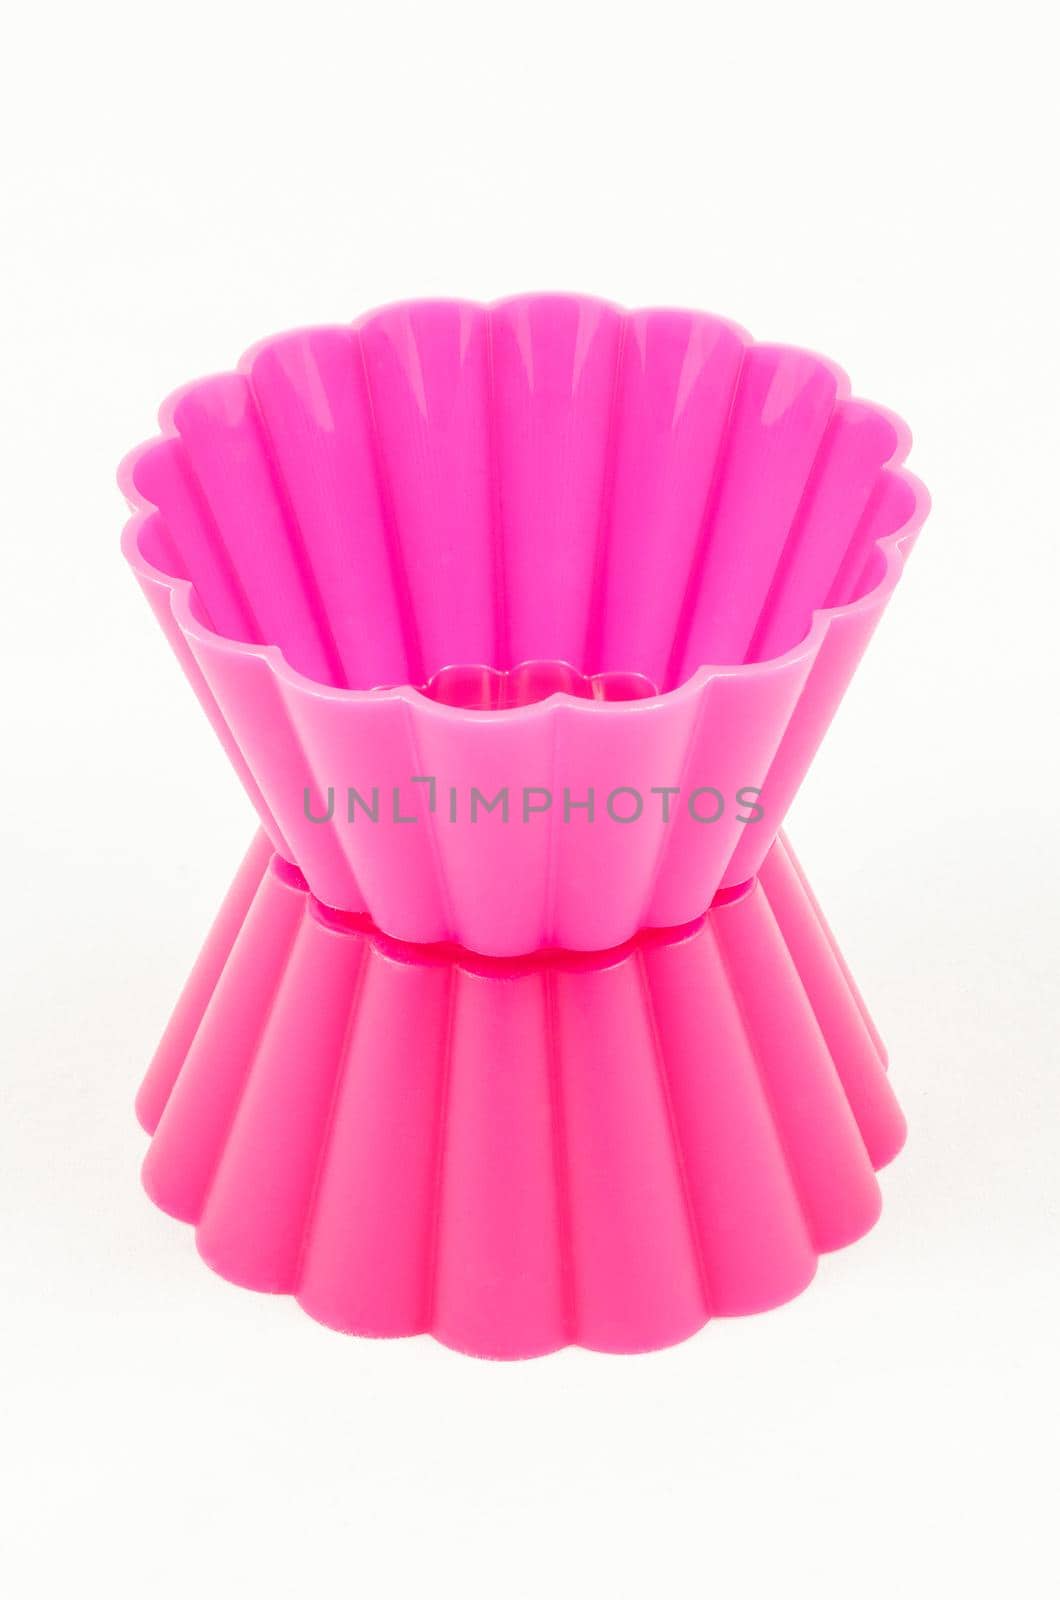 Pink silicone cake cups by marcorubino